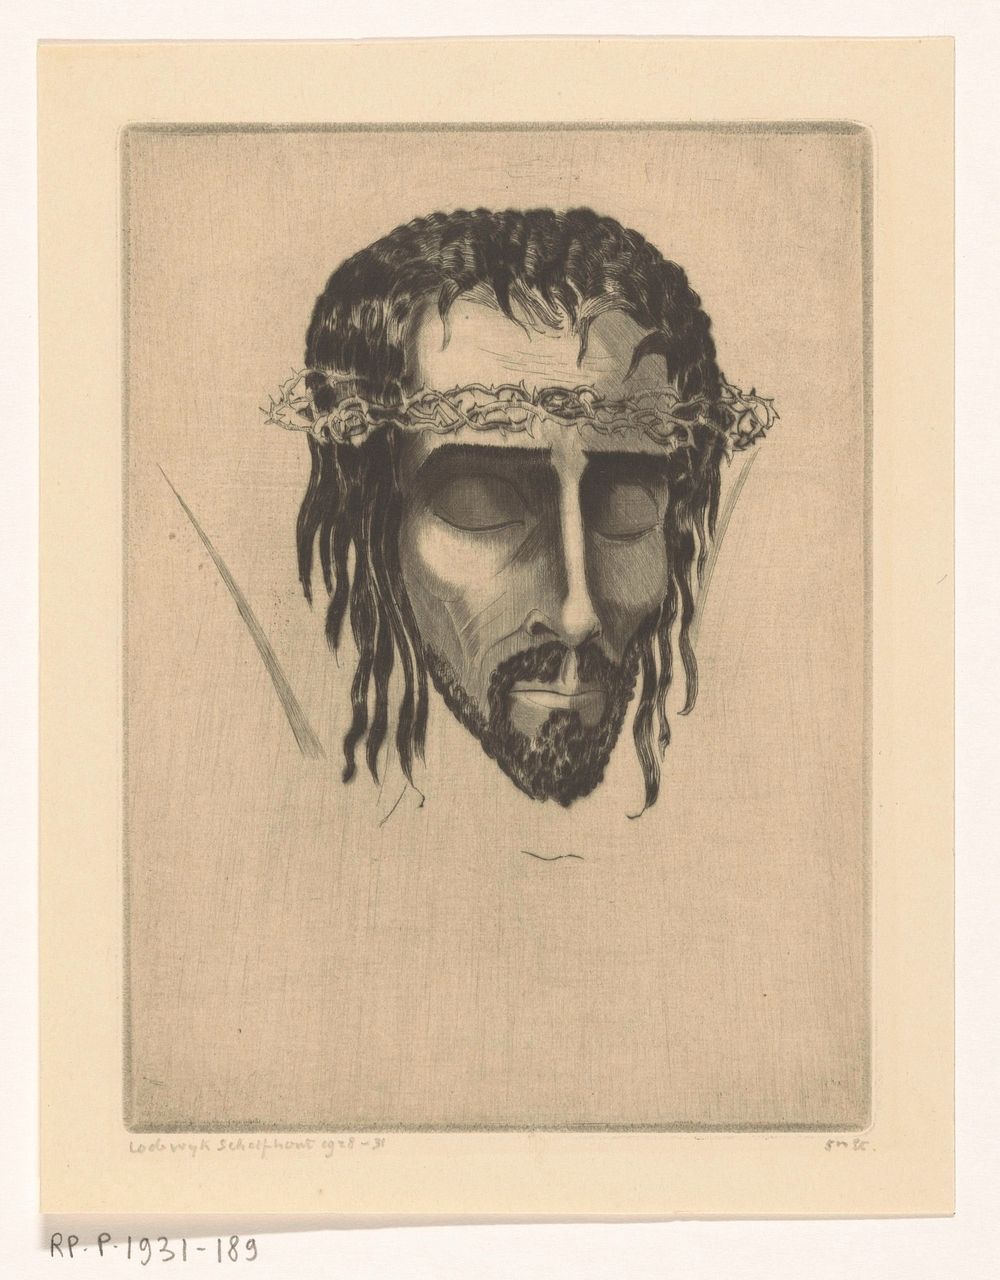 Hoofd van Christus (1928) by Lodewijk Schelfhout and N V Roeloffzen and Hübner